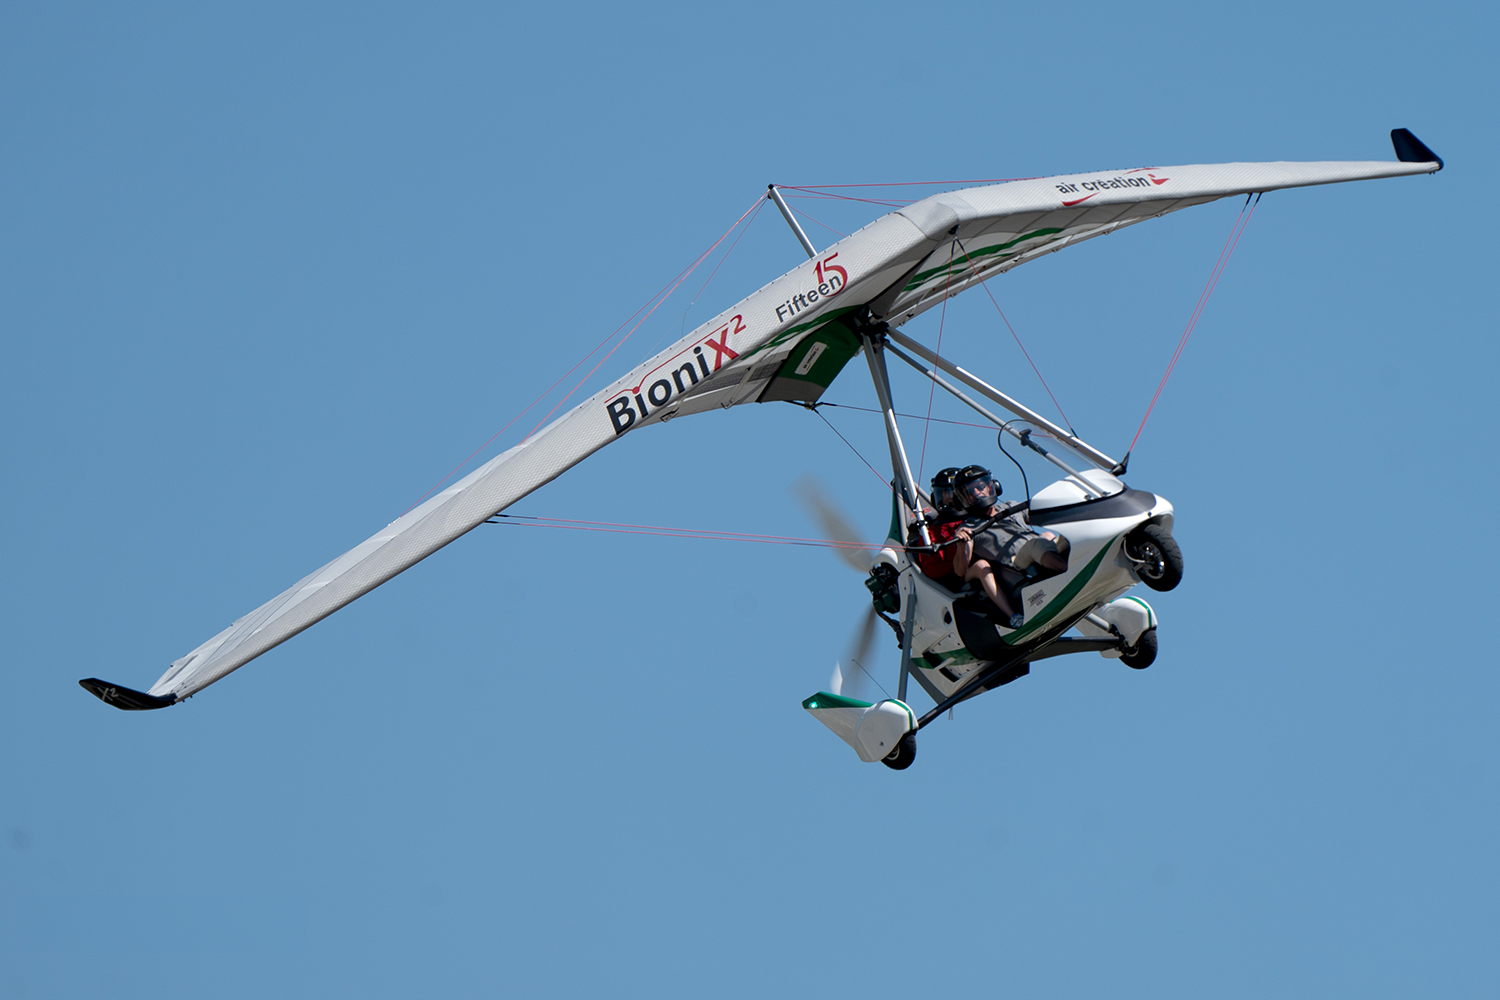 fly/en-vol-bionix2-15-tanarg-neo-product-ulm-pendulaire-microlihgt-ultralight-trike-wing-10.png